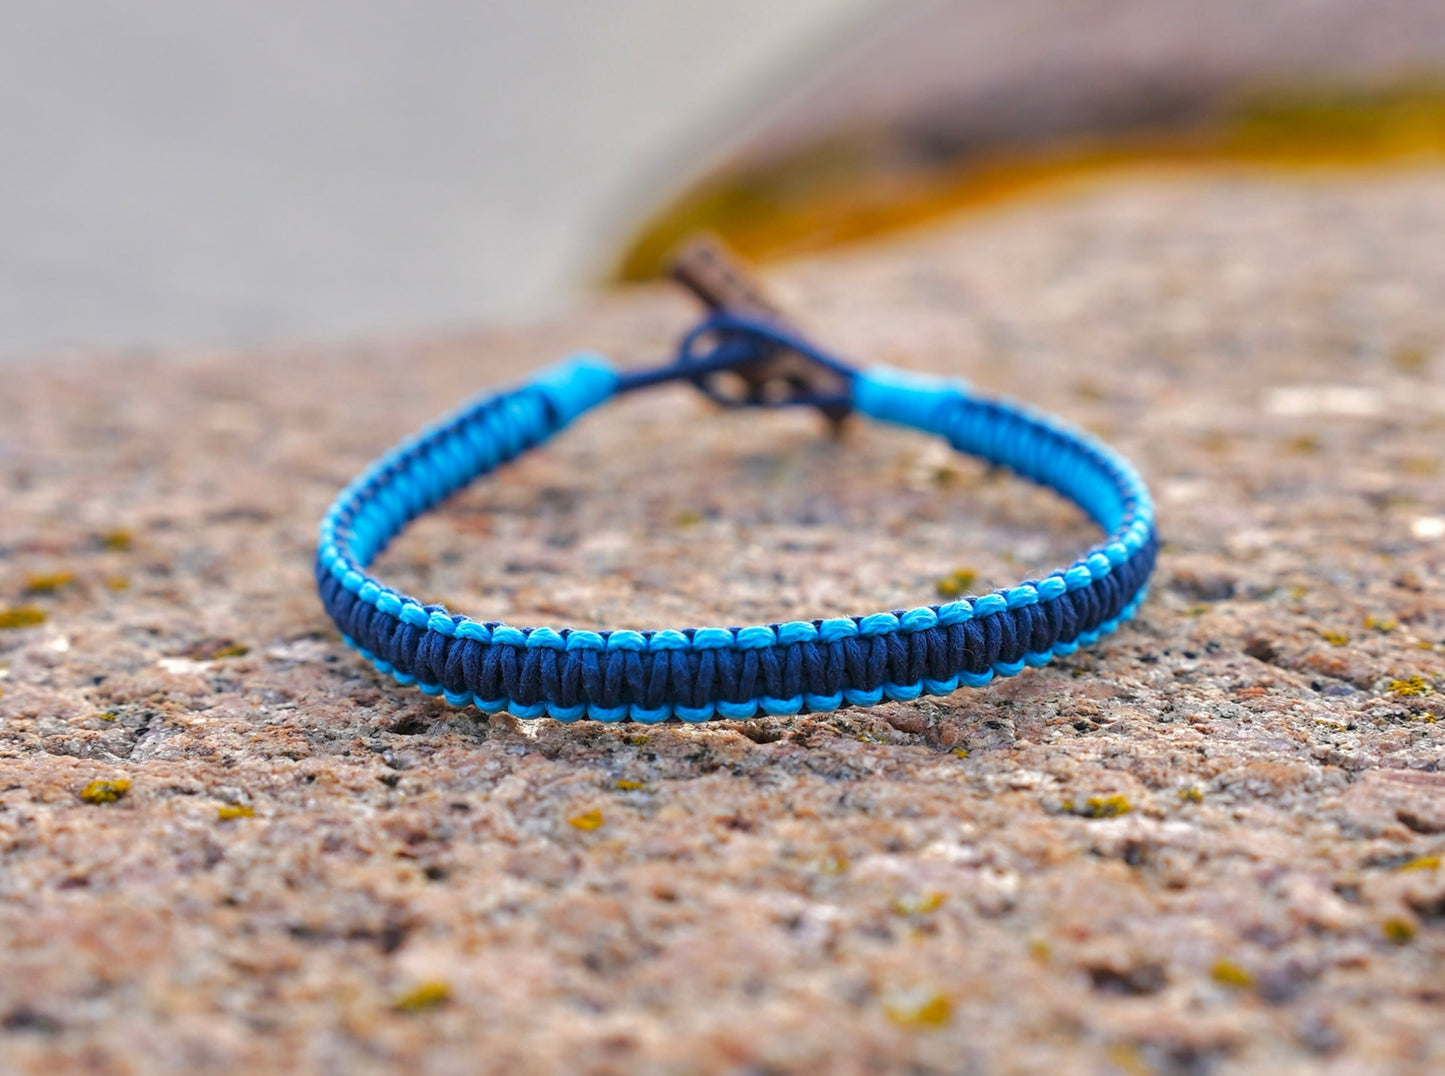 2 kilo CleanSea Bracelet - New design Blue/Turquoise - CleanSea